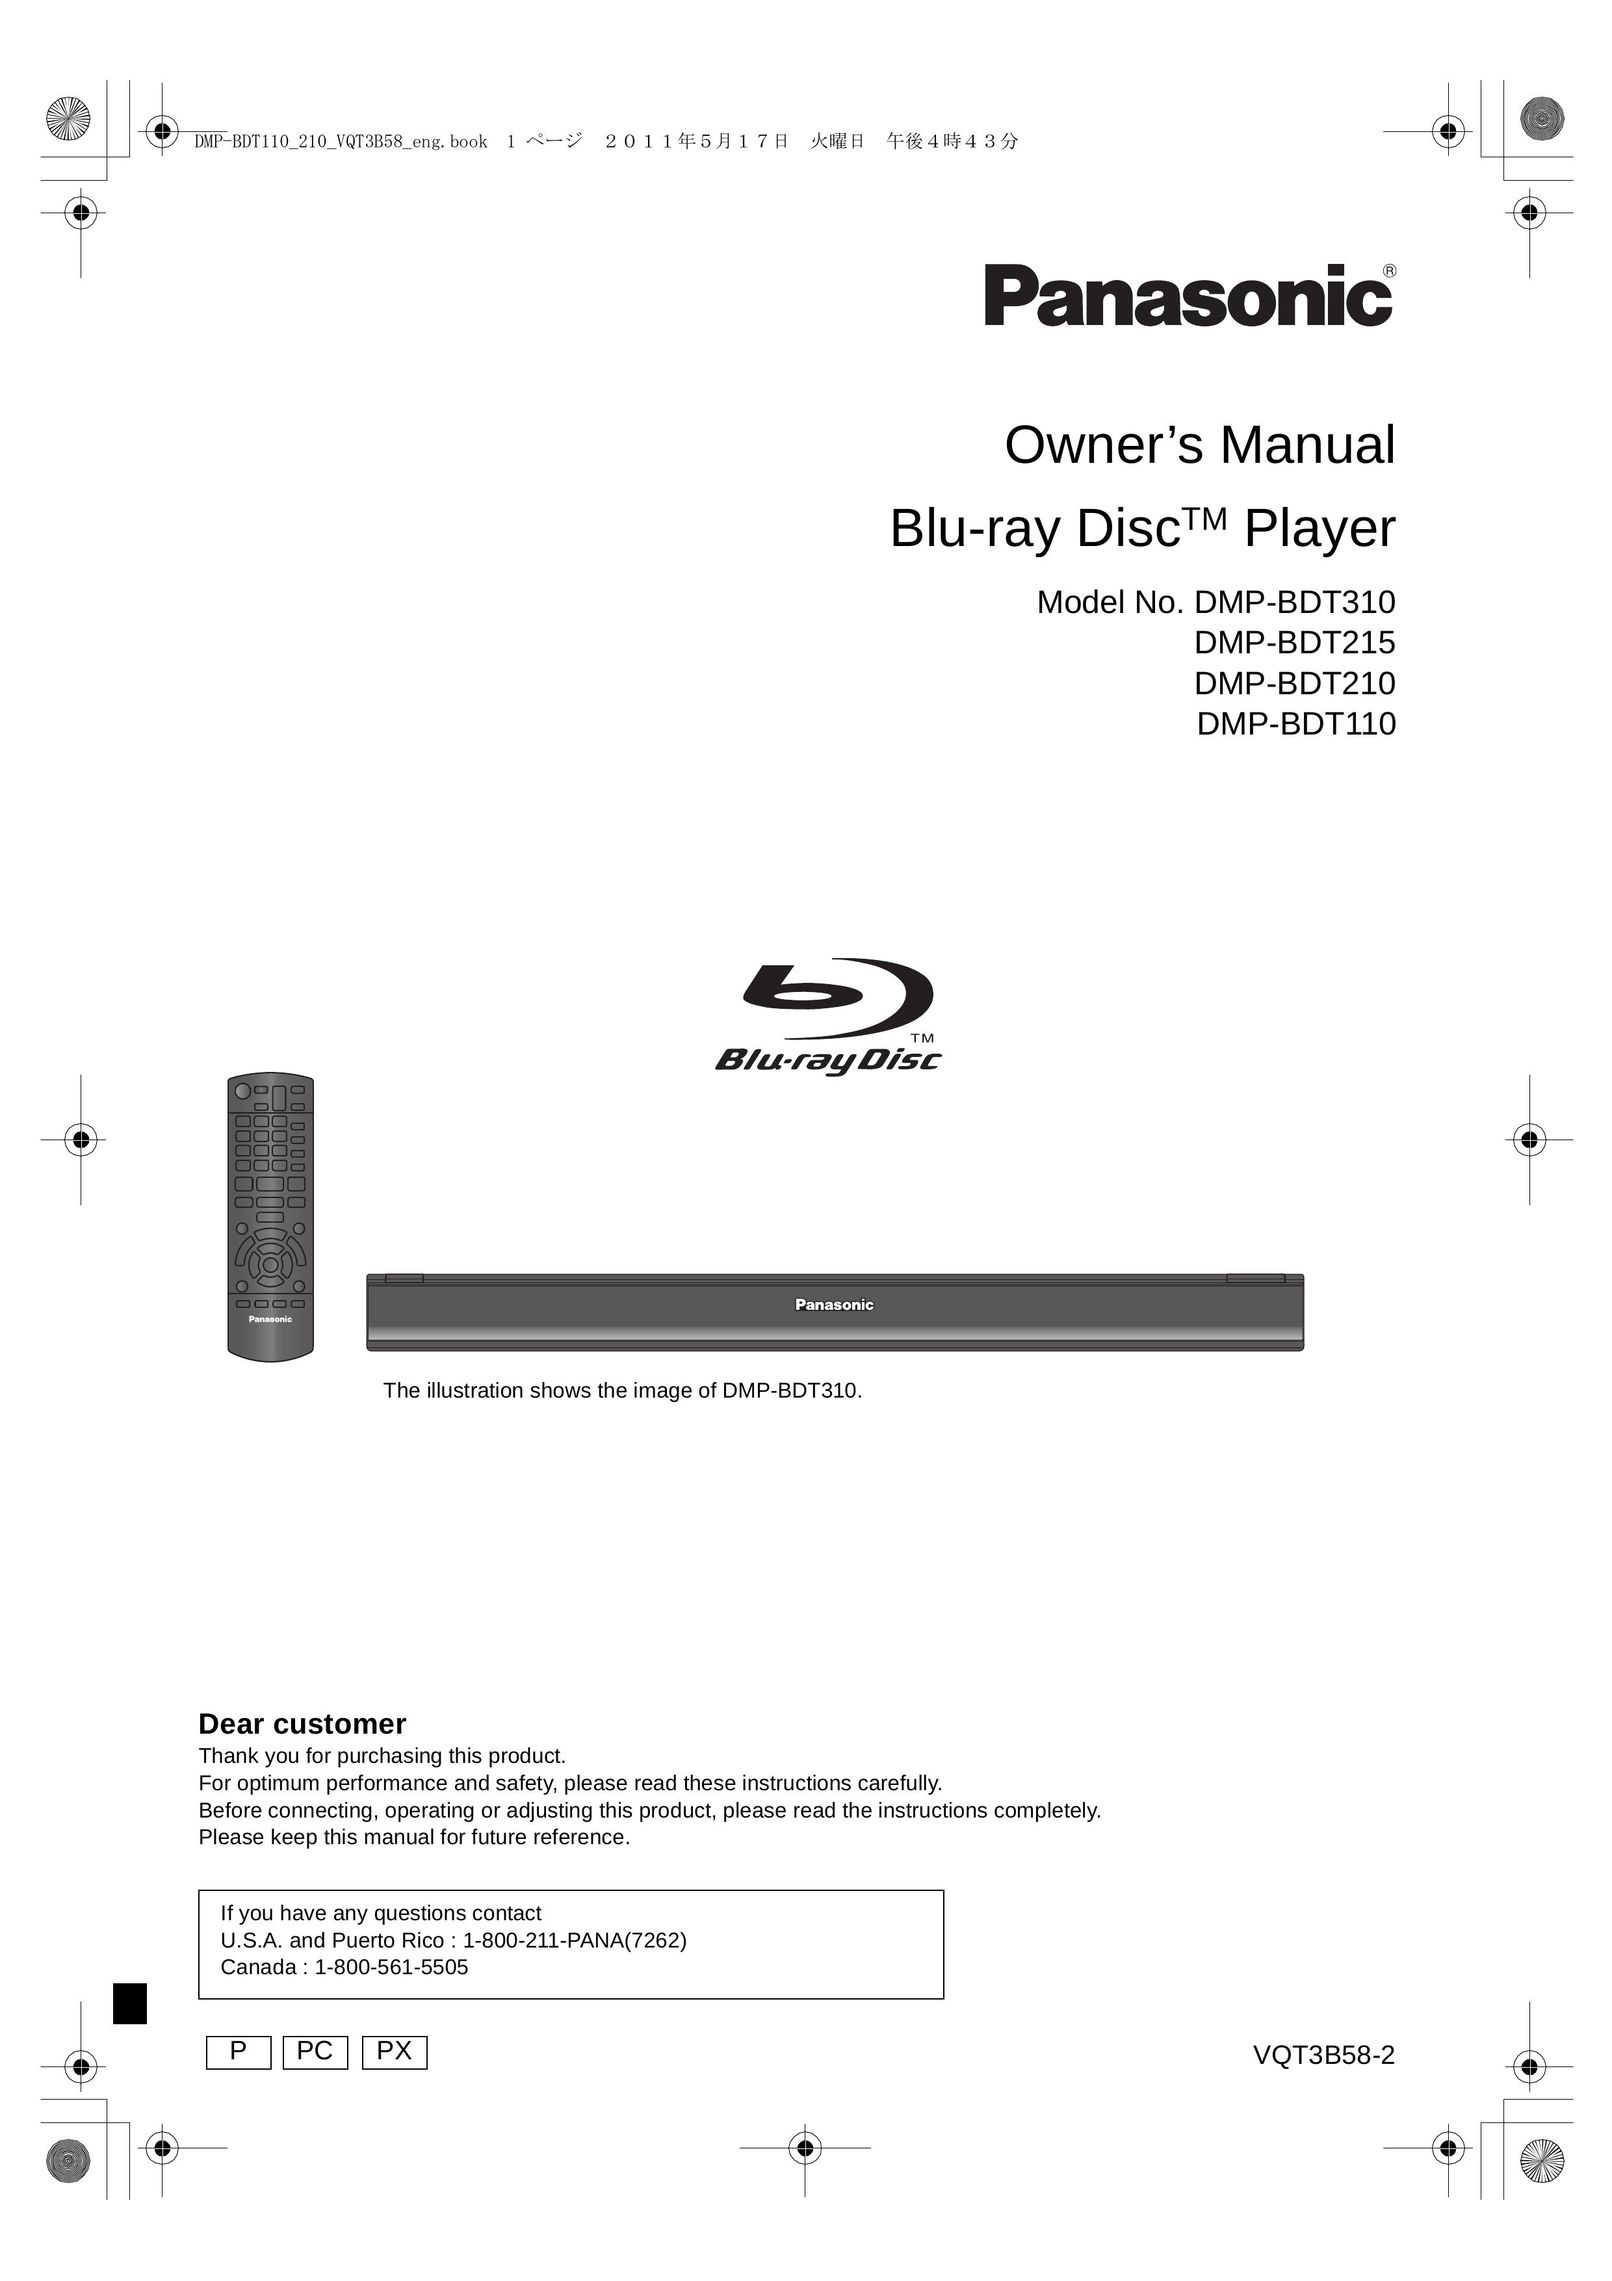 Panasonic DMP-BDT215 Blu-ray Player User Manual